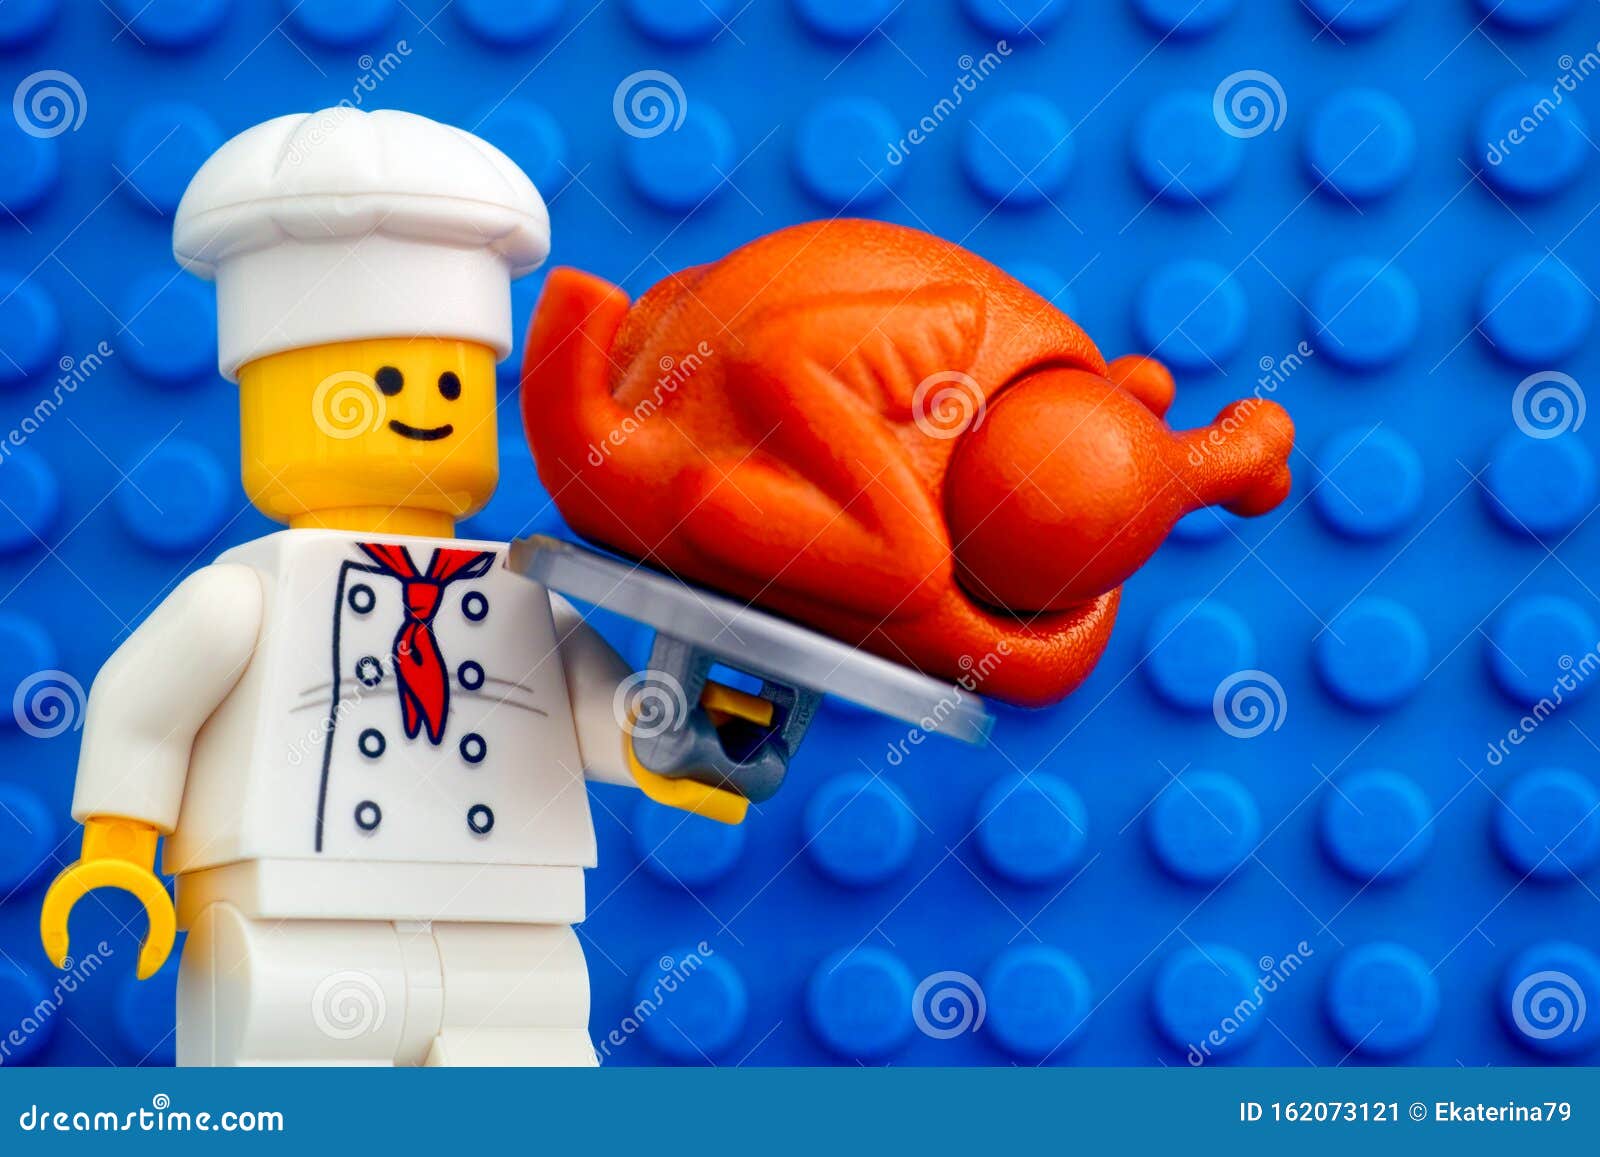 LEGO® City Minifigure Chef lot w/ food apple & turkey leg red scarf tie